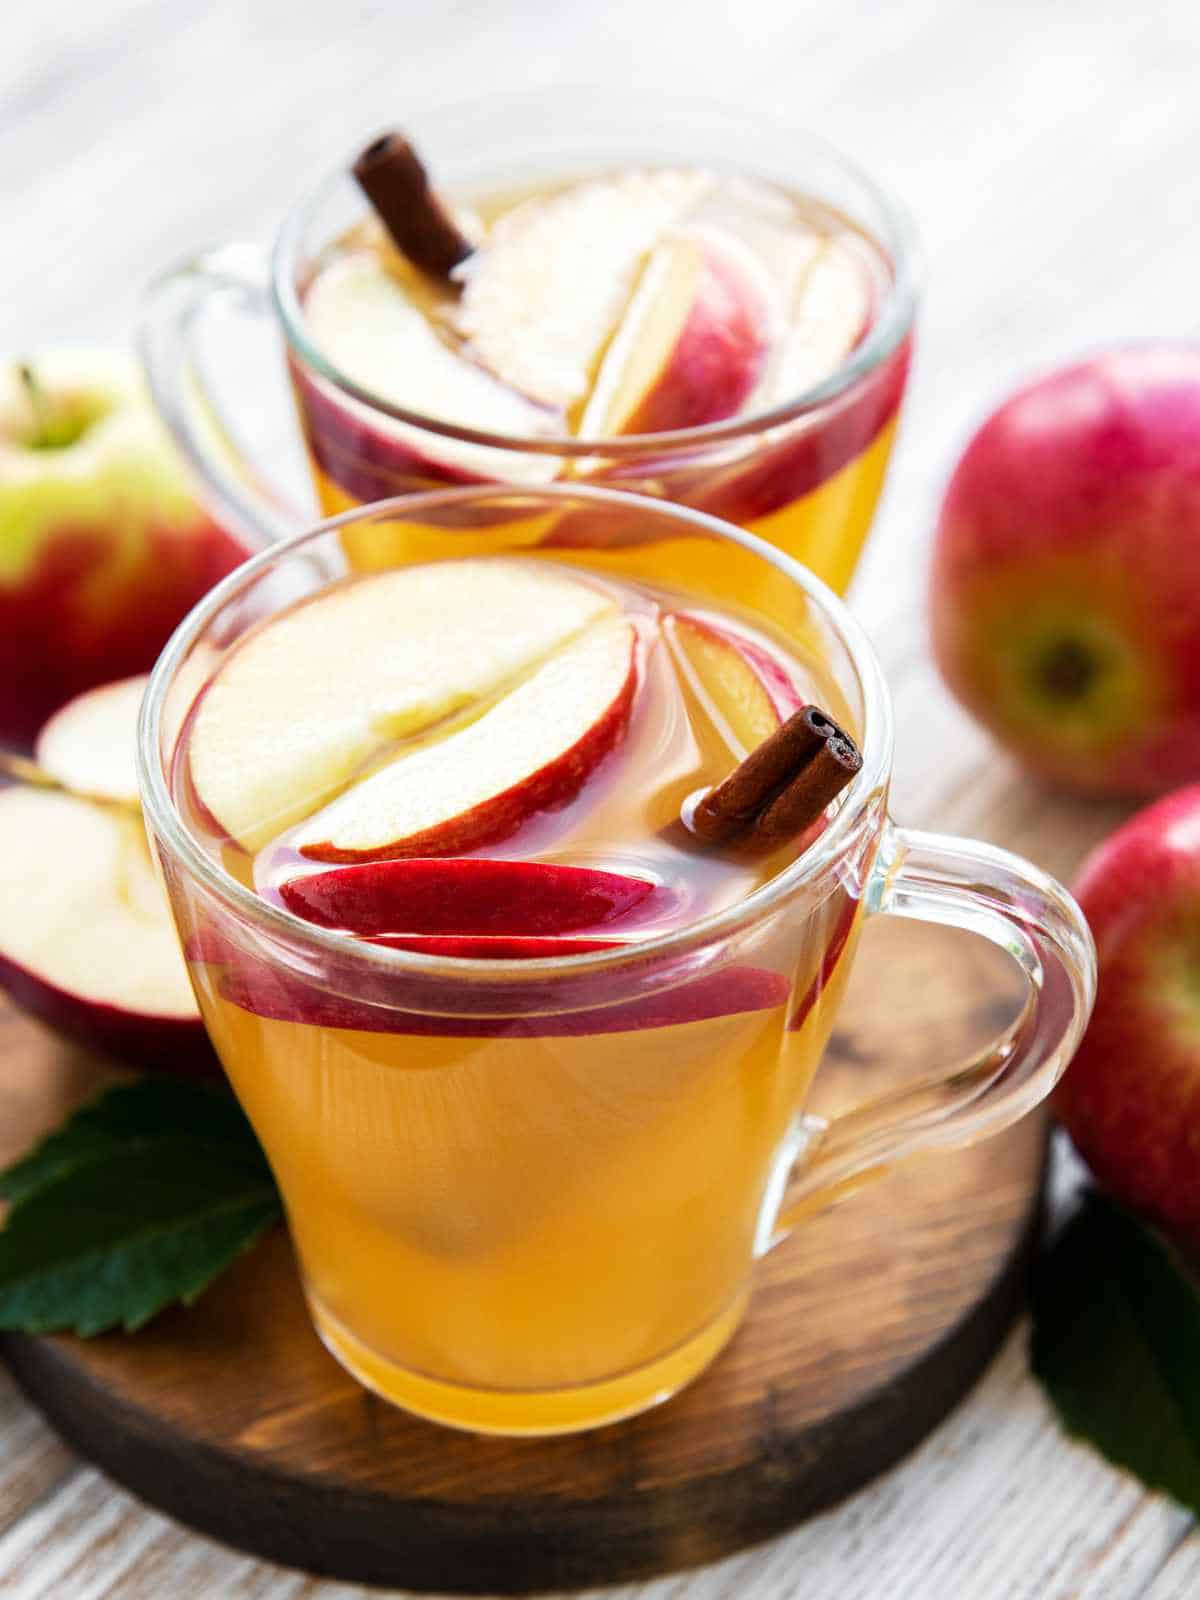 Apple cider bourbon cocktail with apple slices and cinnamon sticks.